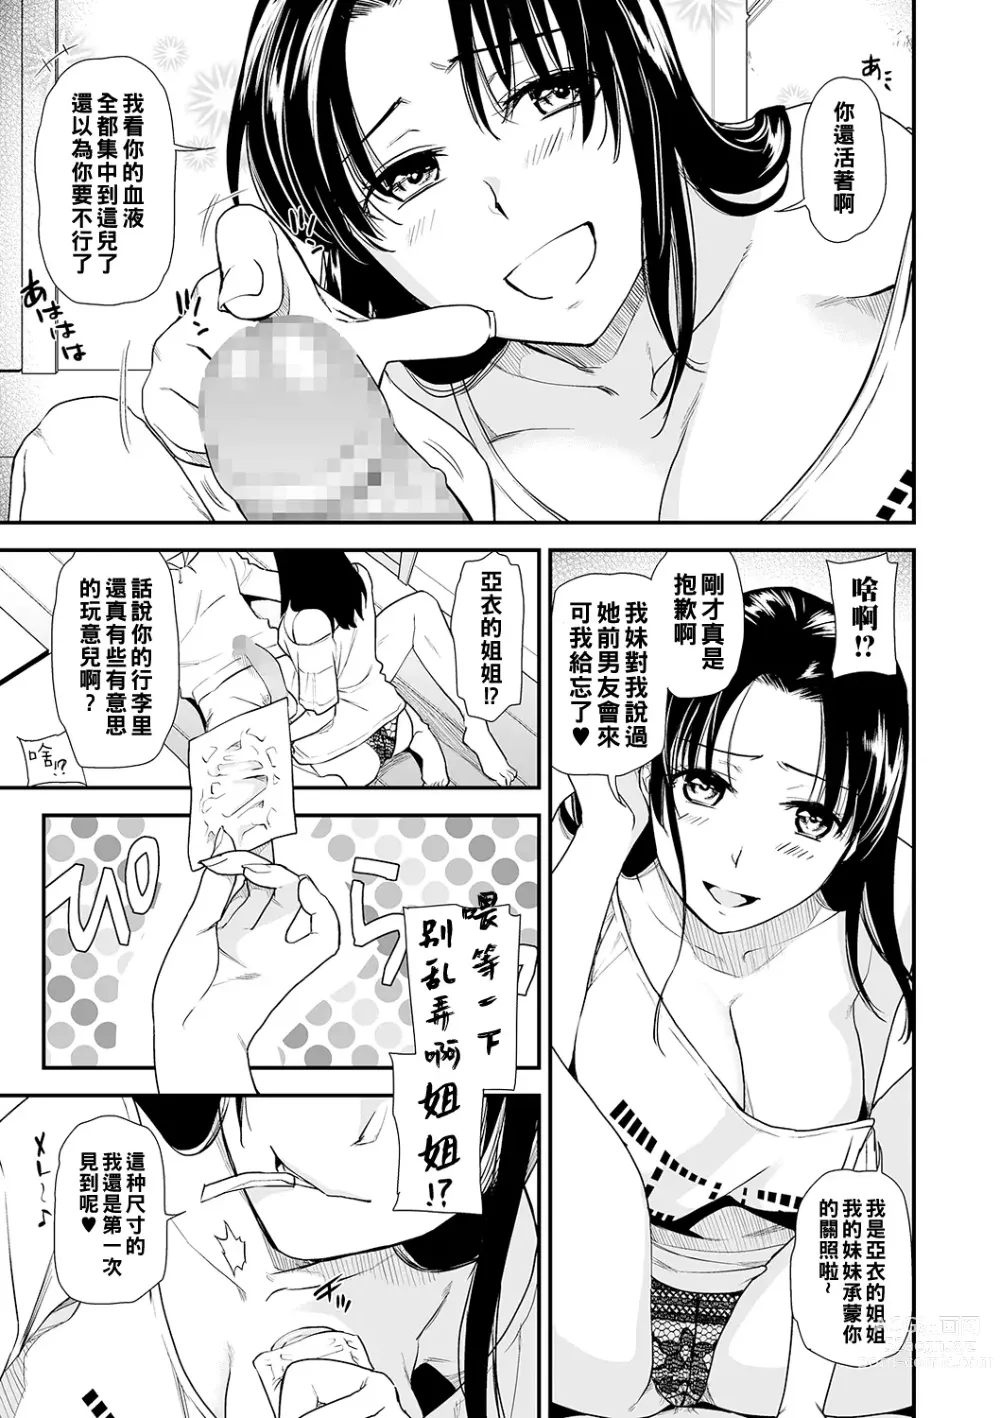 Page 3 of manga Eroi Ane no Sonzai